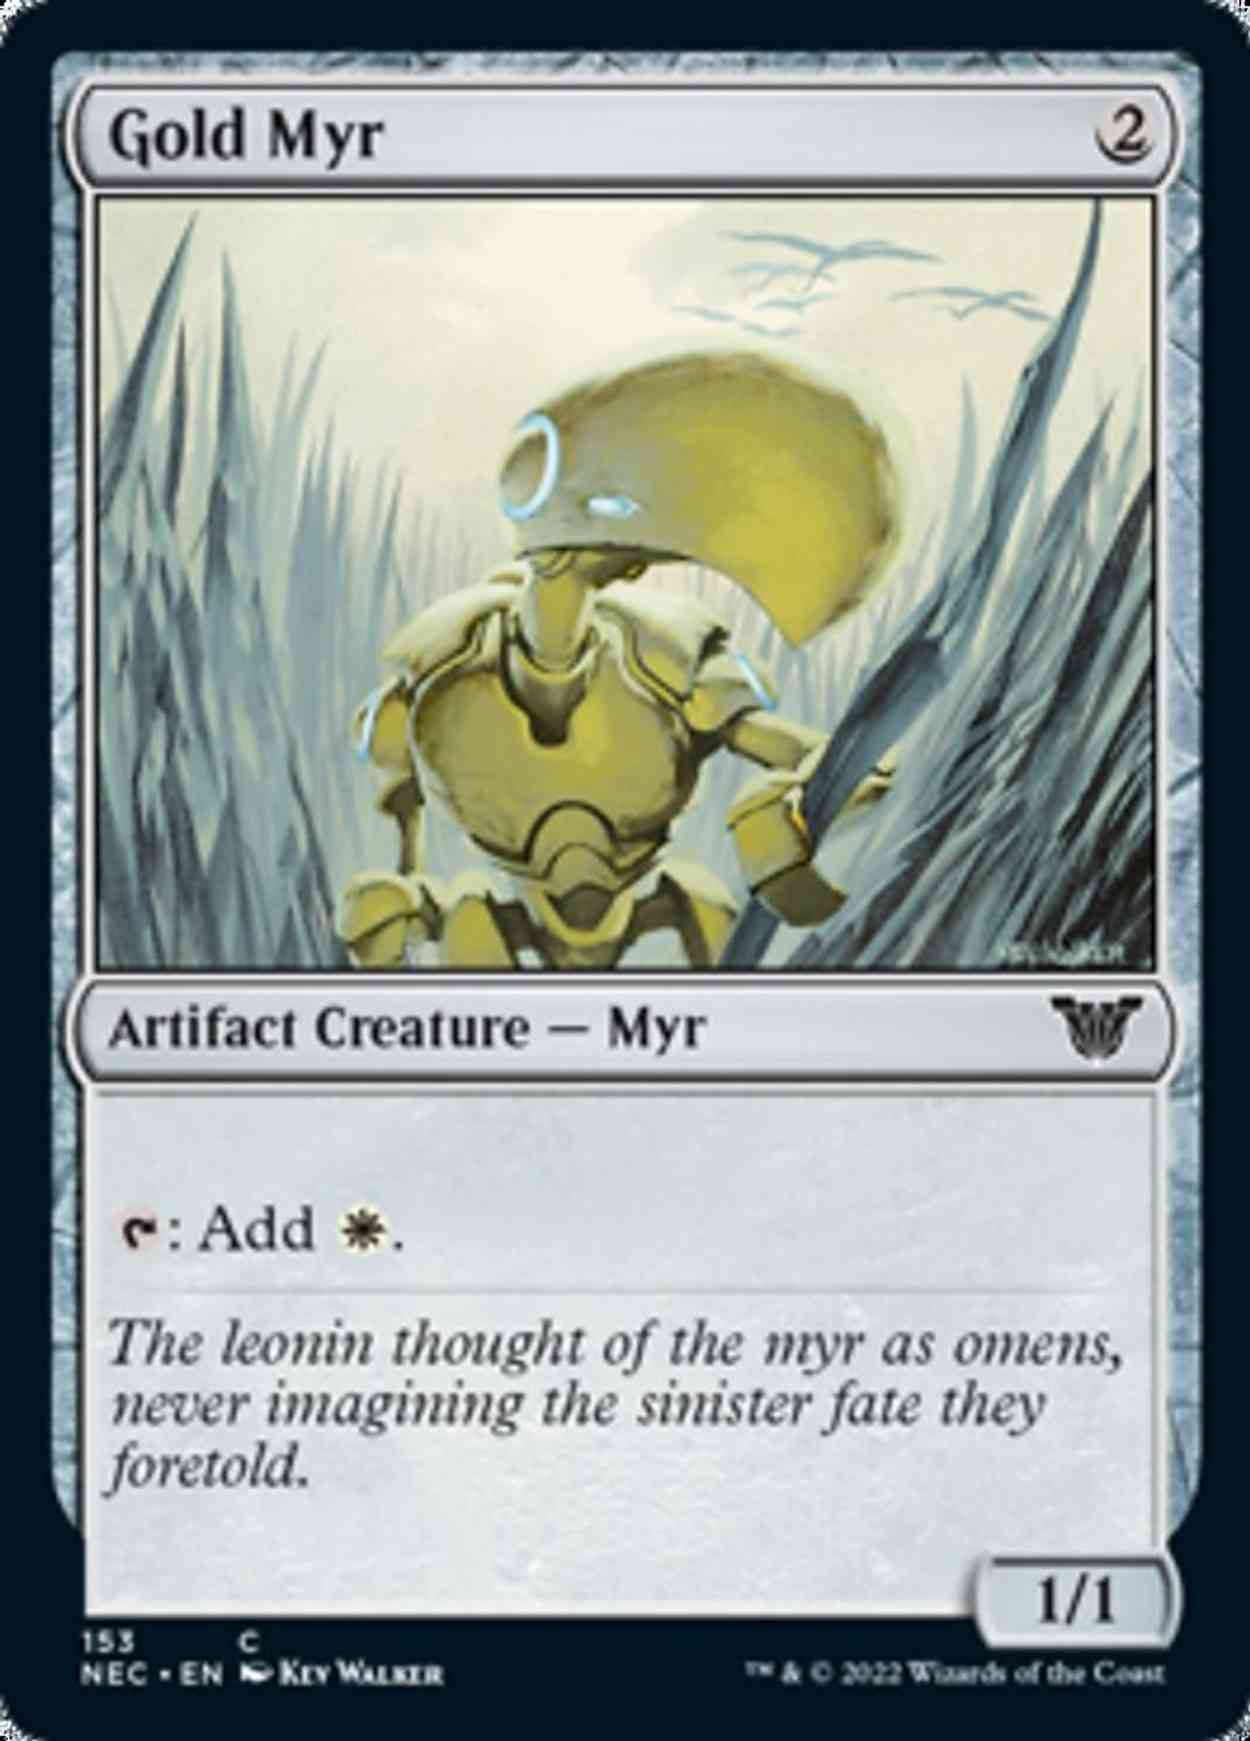 Gold Myr magic card front